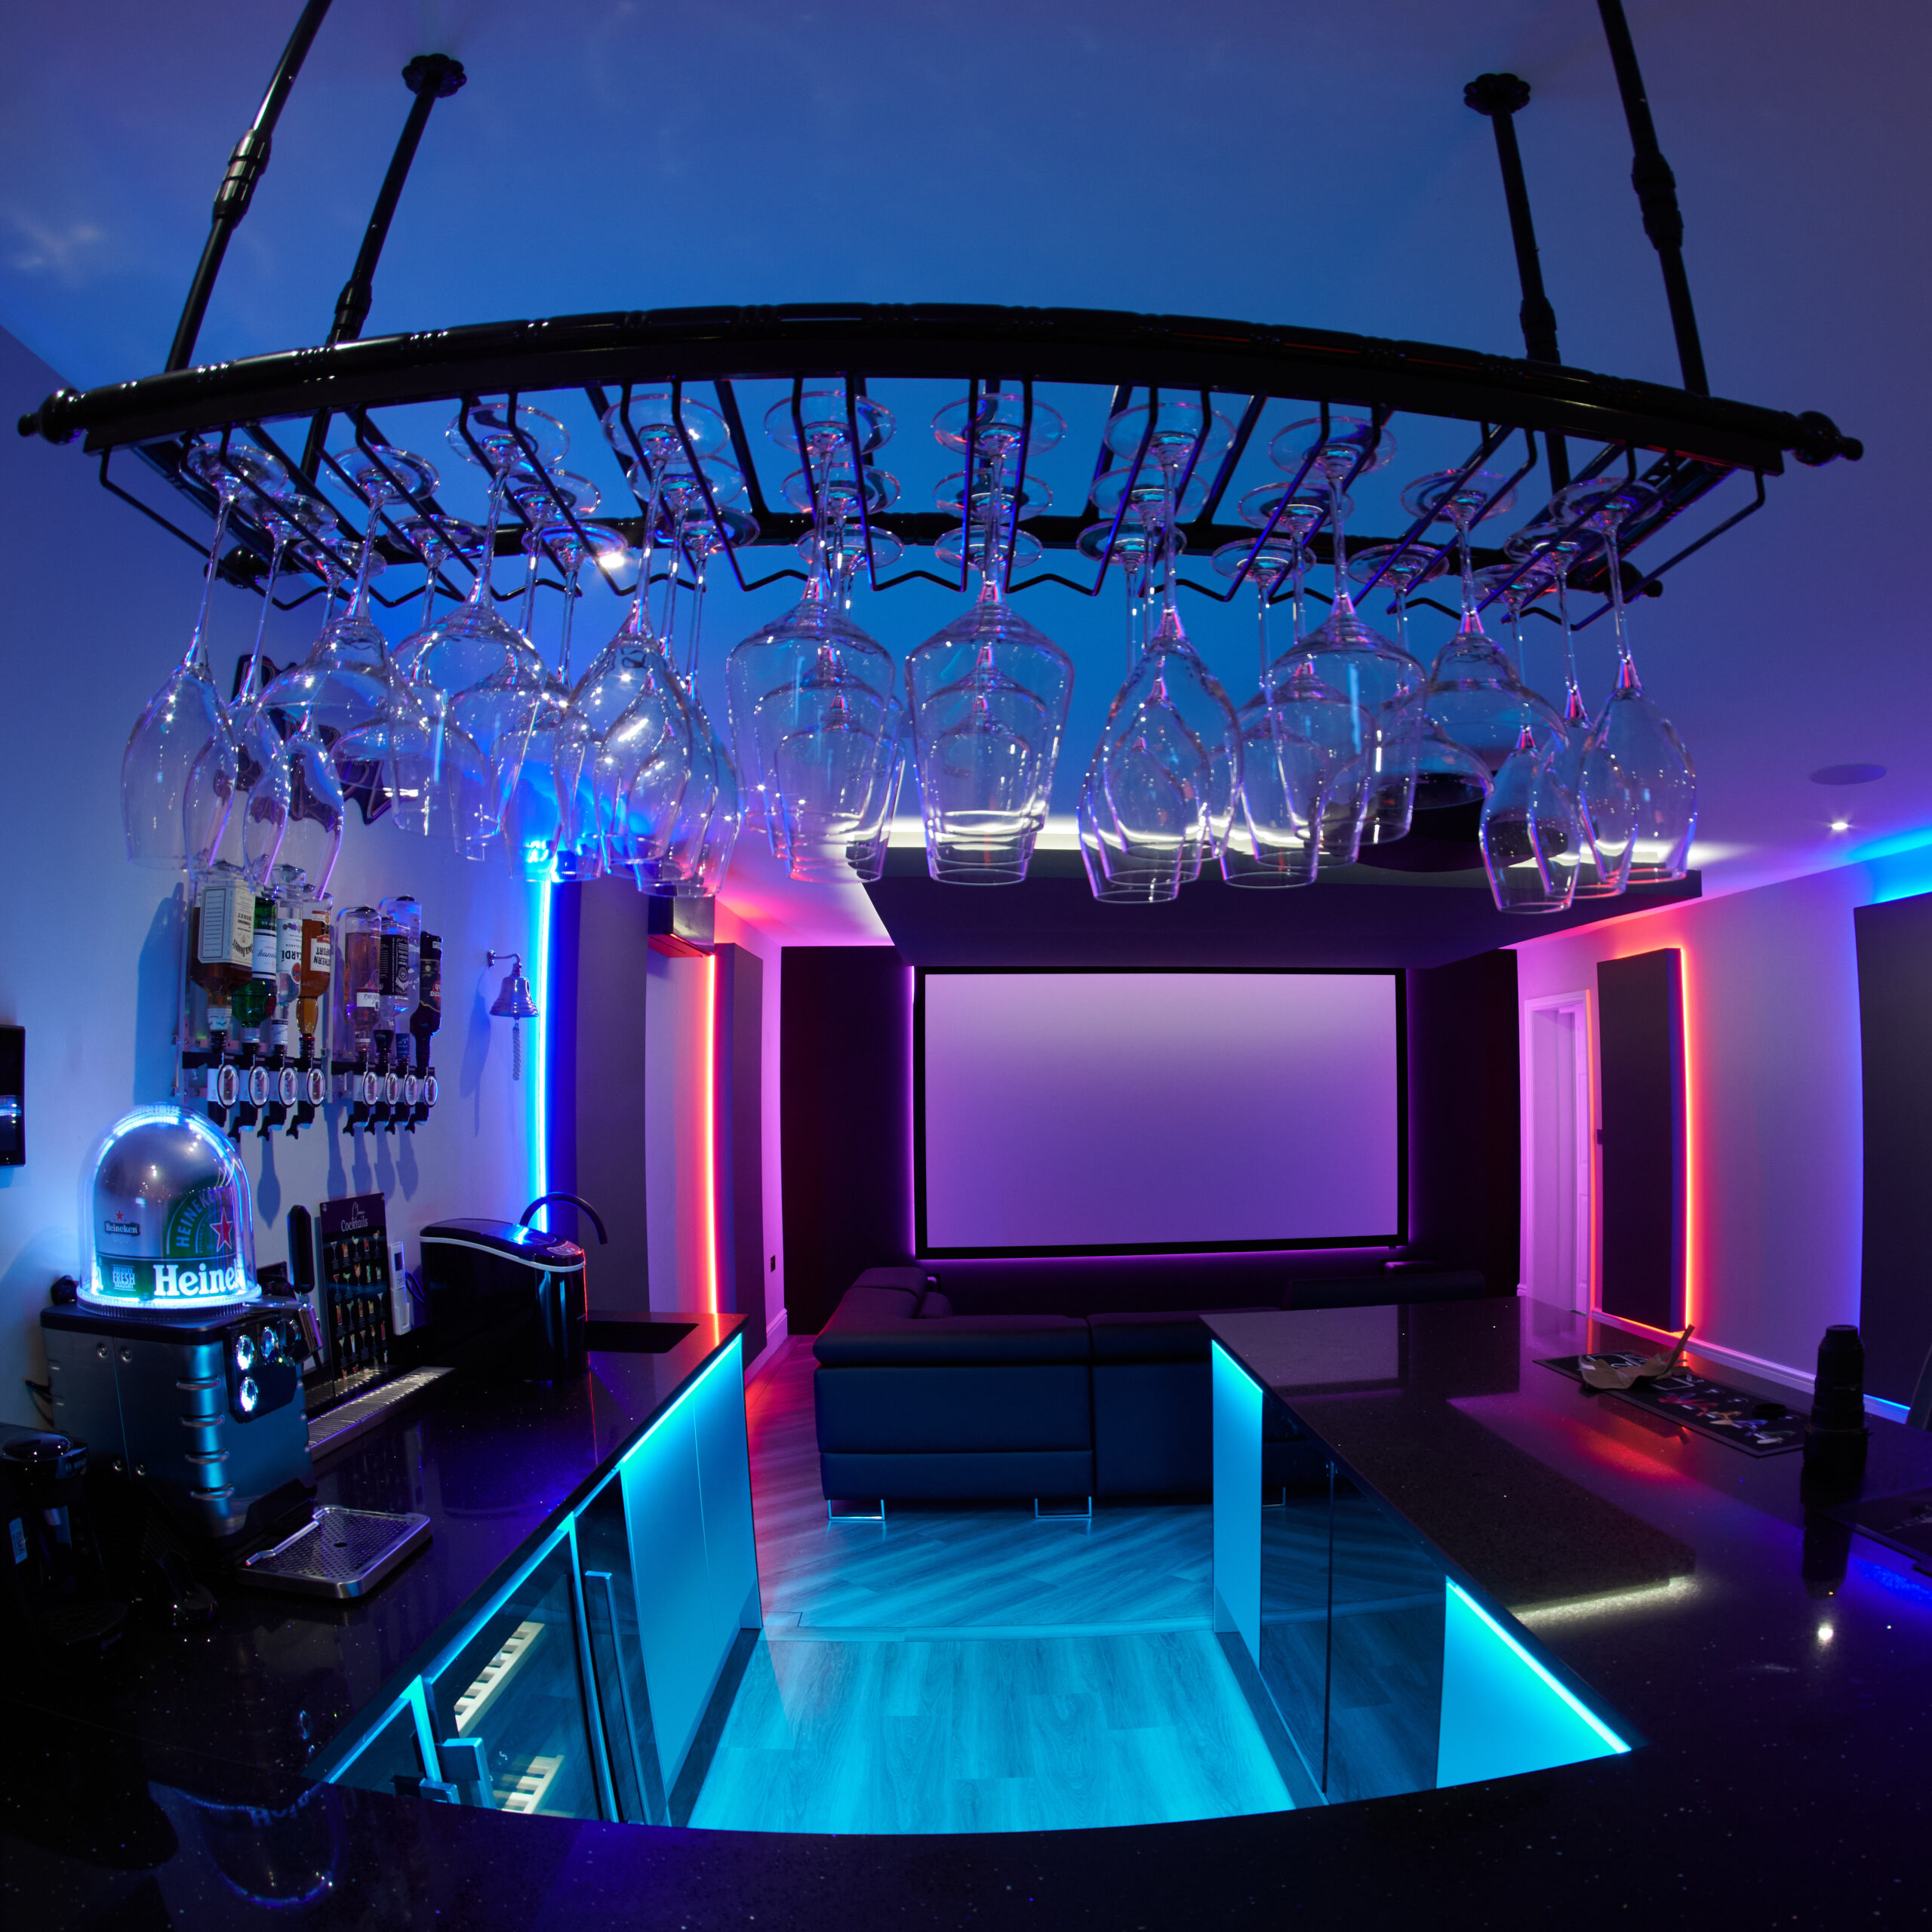 Cinema Room with Bar Area